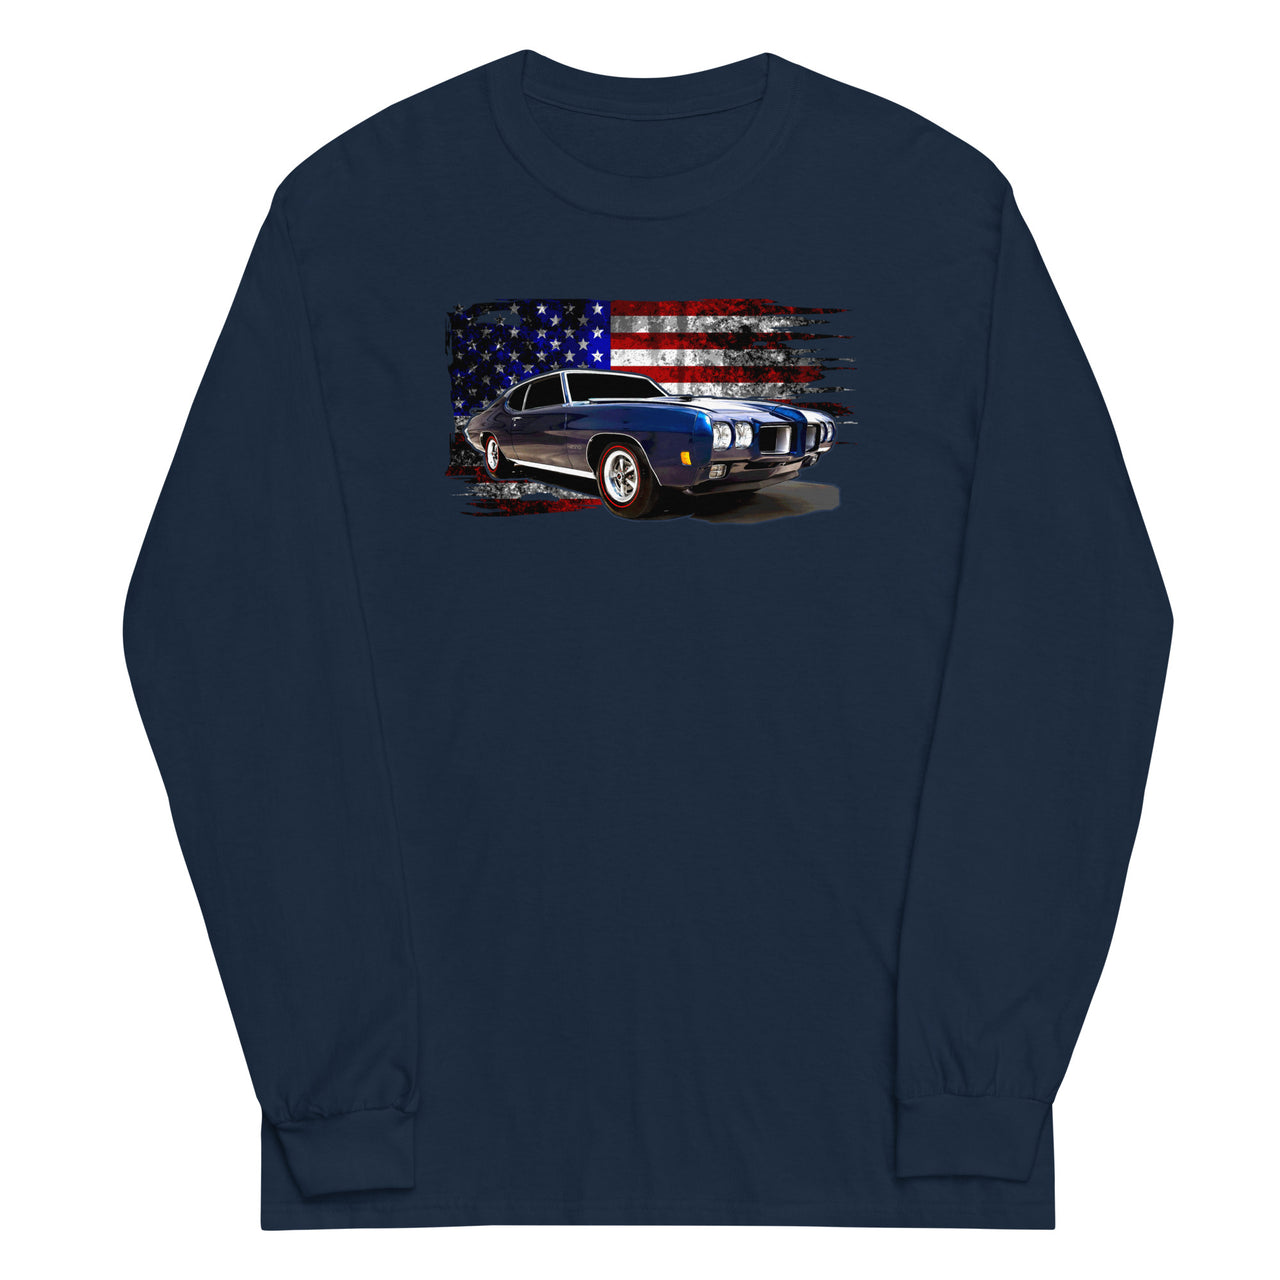 1970 GTO Long Sleeve Shirt in navy